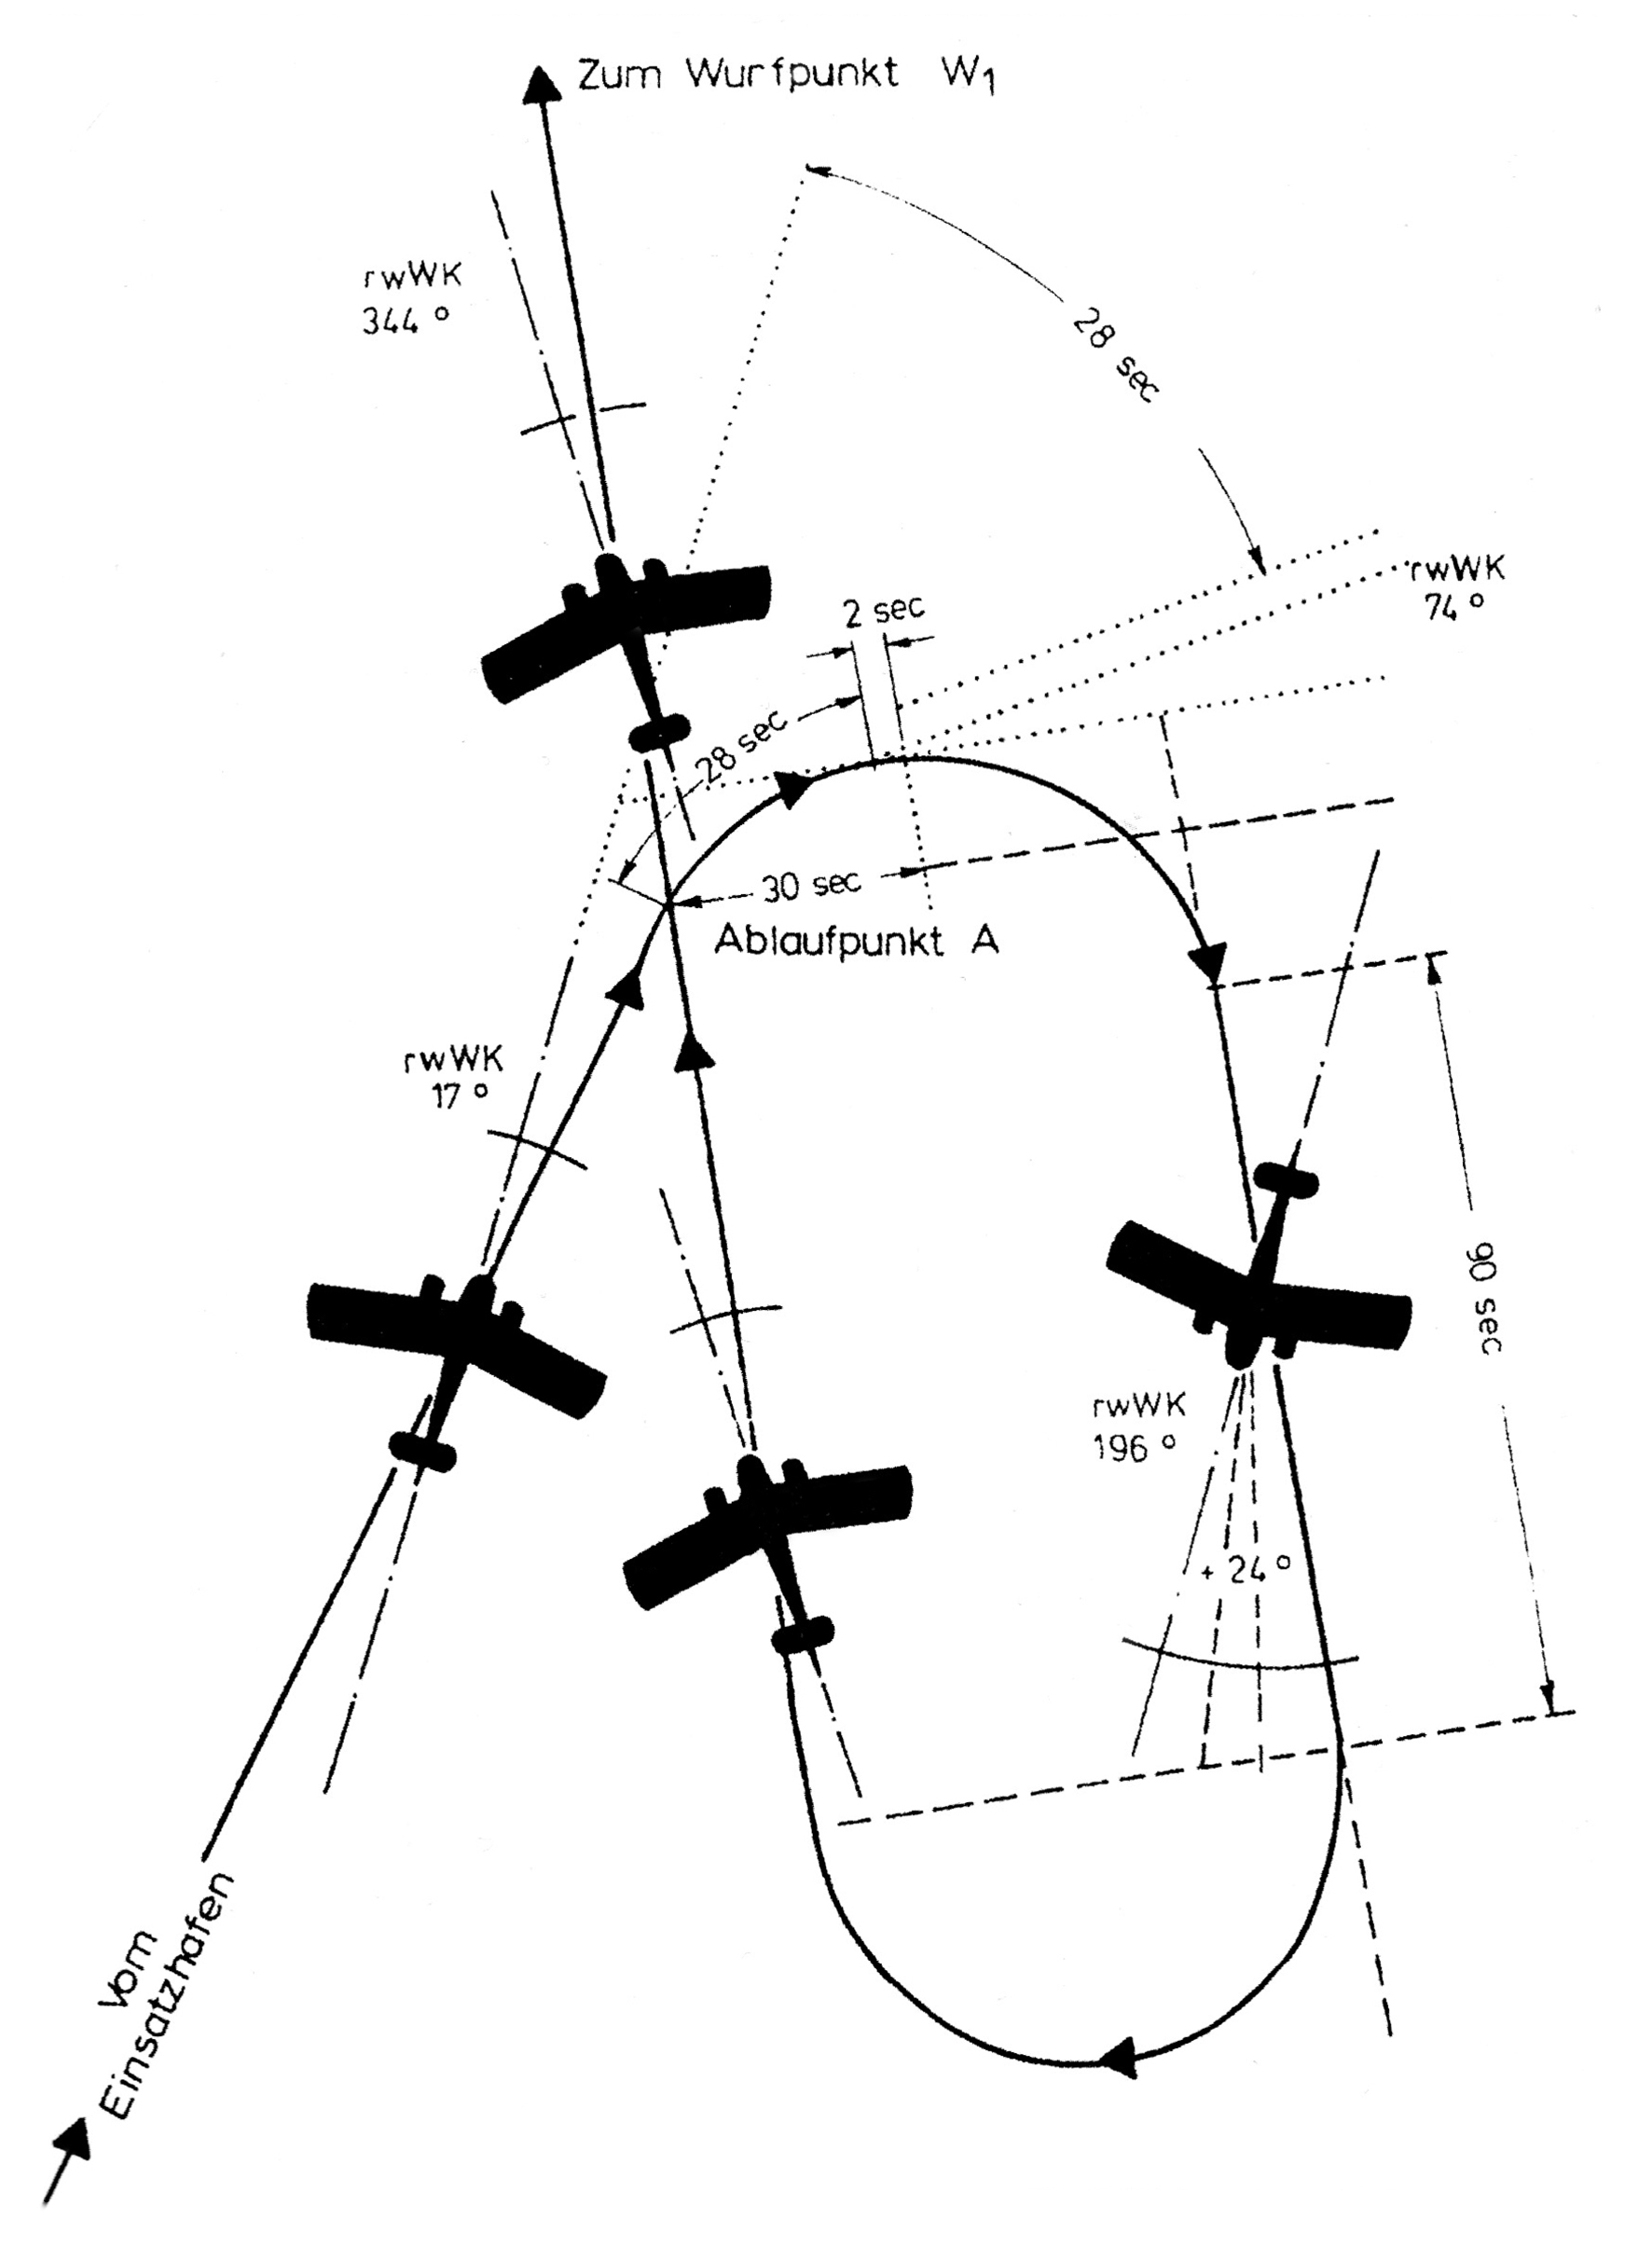 V1-Start ab Trägerflugzeug